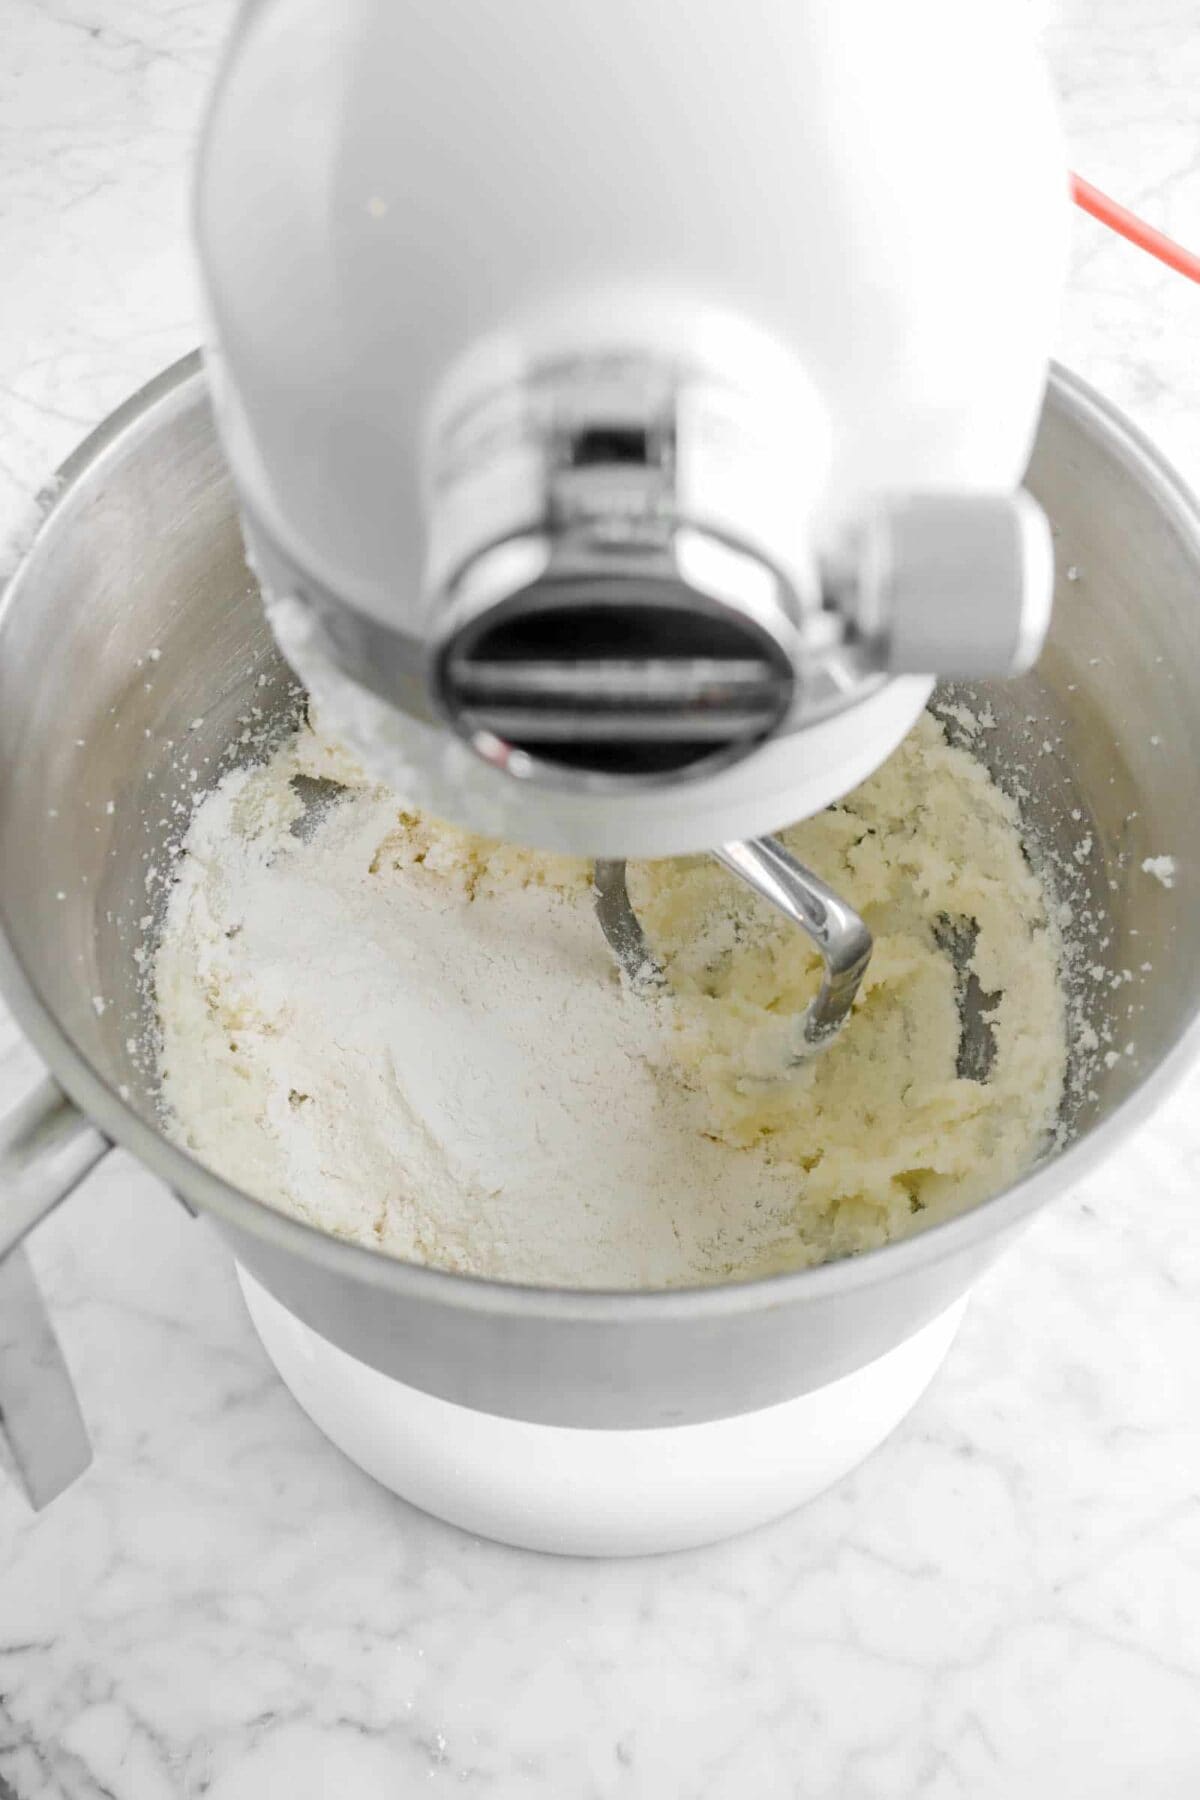 flour added to butter mixture